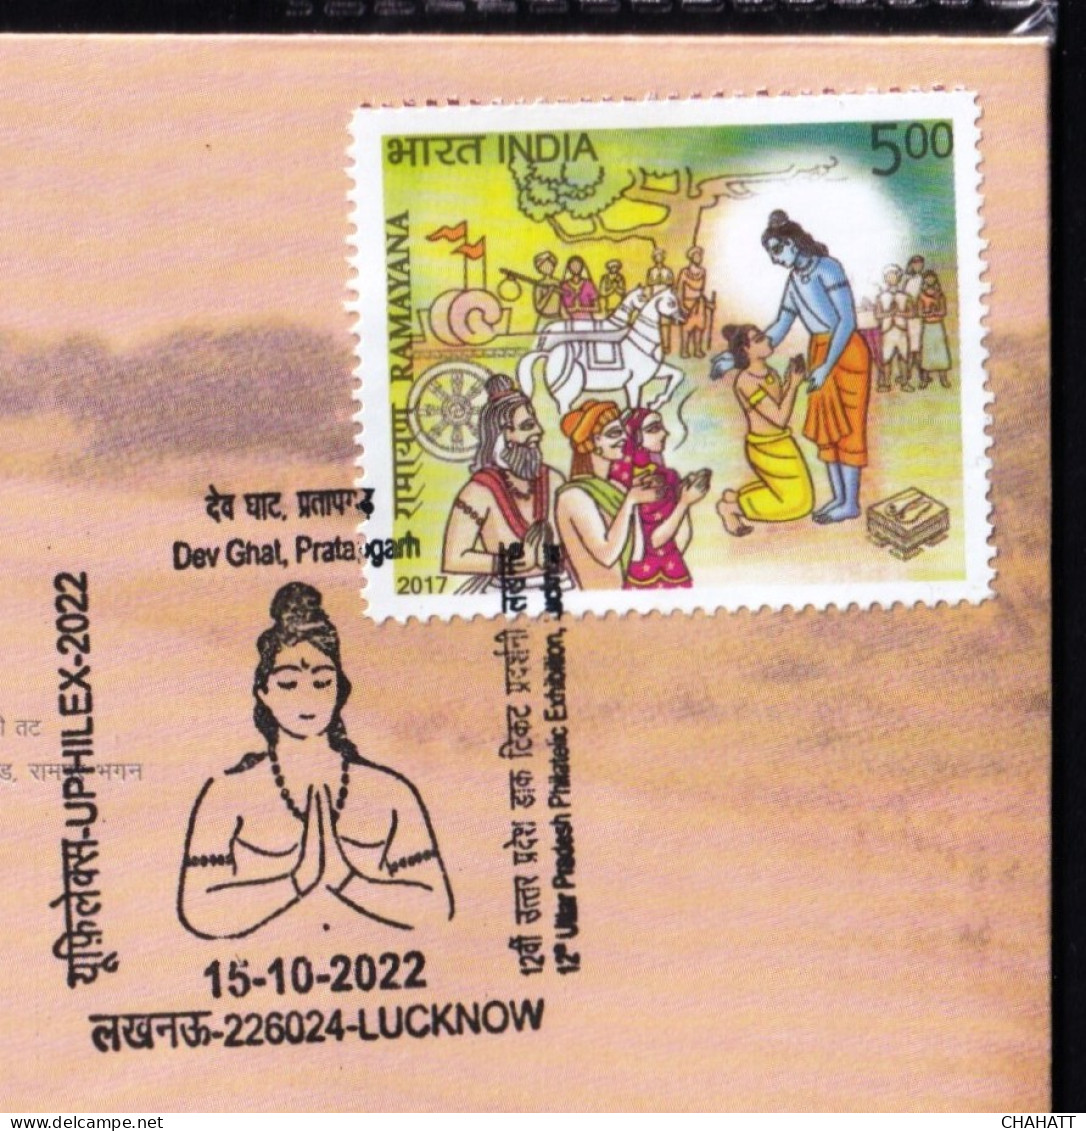 HINDUISM - RAMAYAN-  DEV GHAT, PRATAPGARH - PICTORIAL CANCELLATION - SPECIAL COVER - INDIA -2022- BX4-23 - Hinduismo